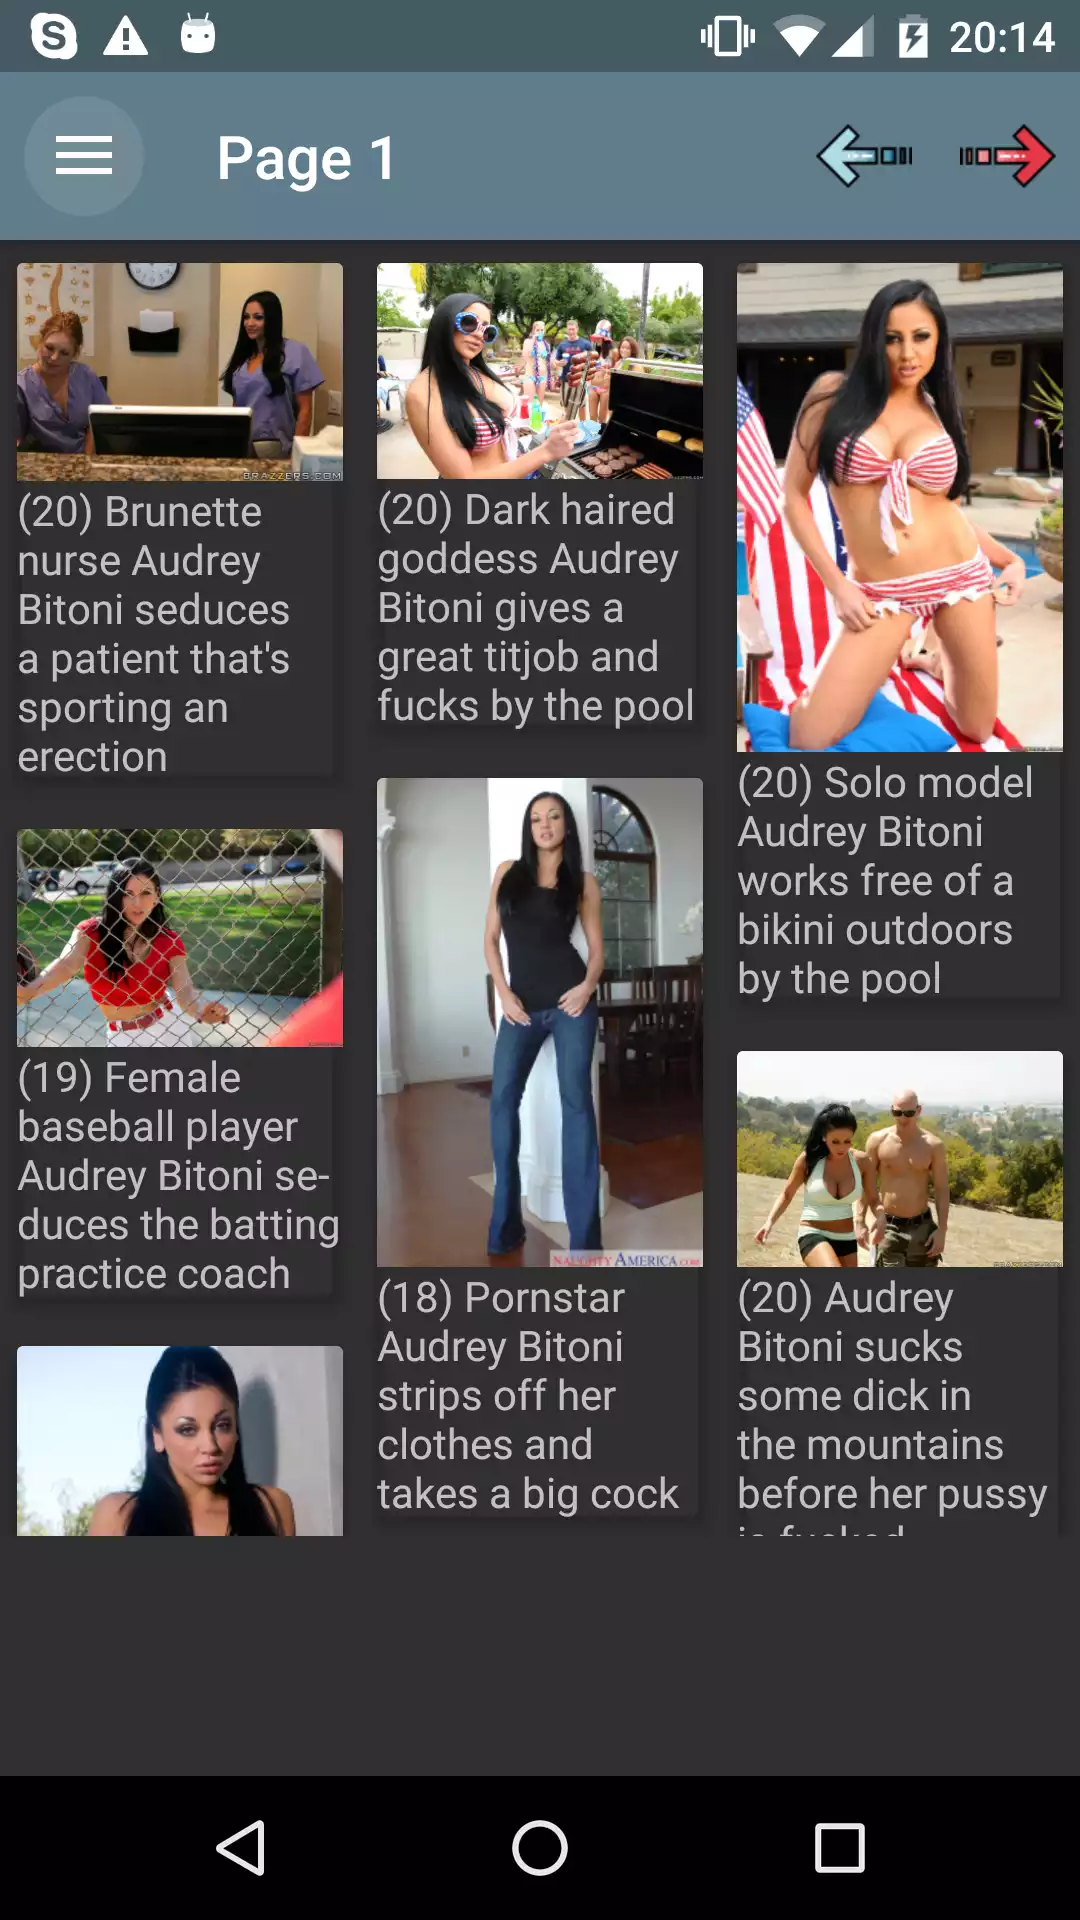 Audrey Bitoni the,hot,pornstars,hentai,anime,photos,apps,erotic,ics,dicks,henti,pics,best,app,pornstar,sexy,mobile,galleries,chicks,offline,comics,photo,porn,backgrounds,with